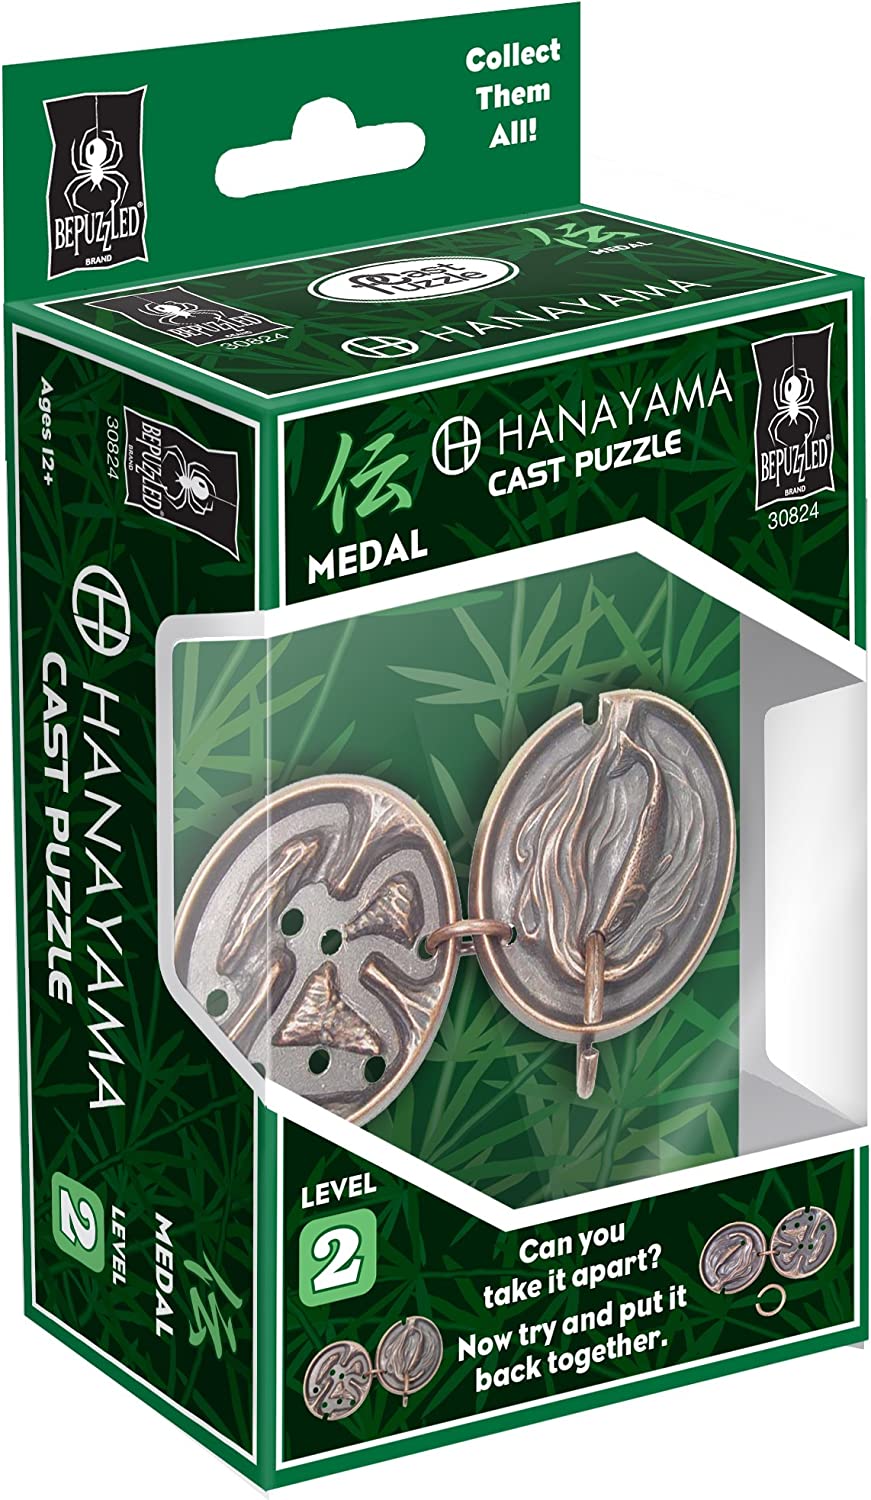 BePuzzled Hanayama Medal Cast-Metal Brain Teaser Puzzle, Level 2